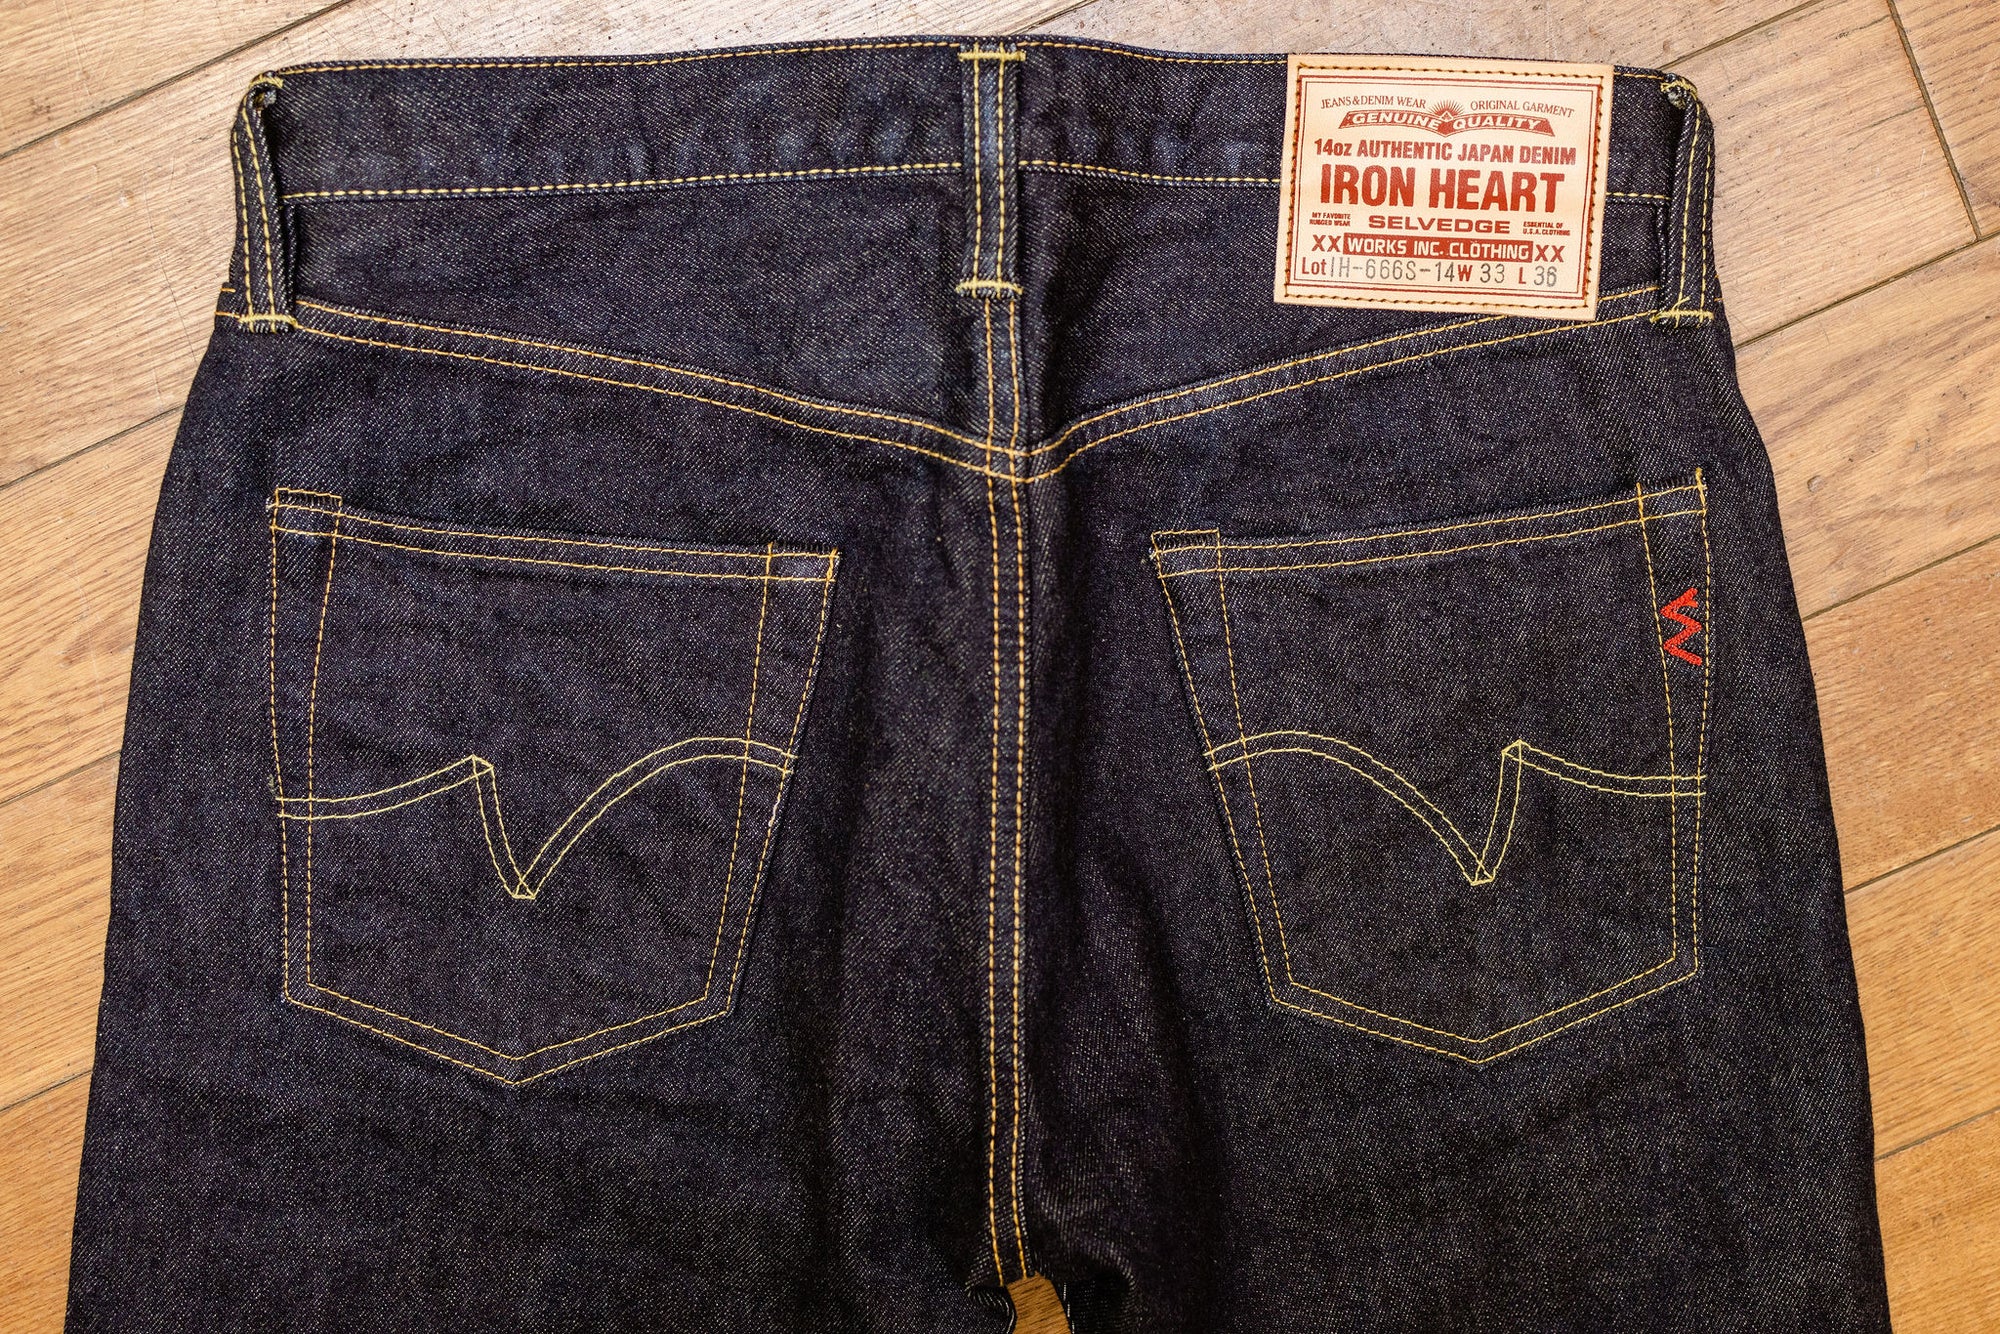 Iron Heart 666-142 Bb Slim Straight Cut Jeans